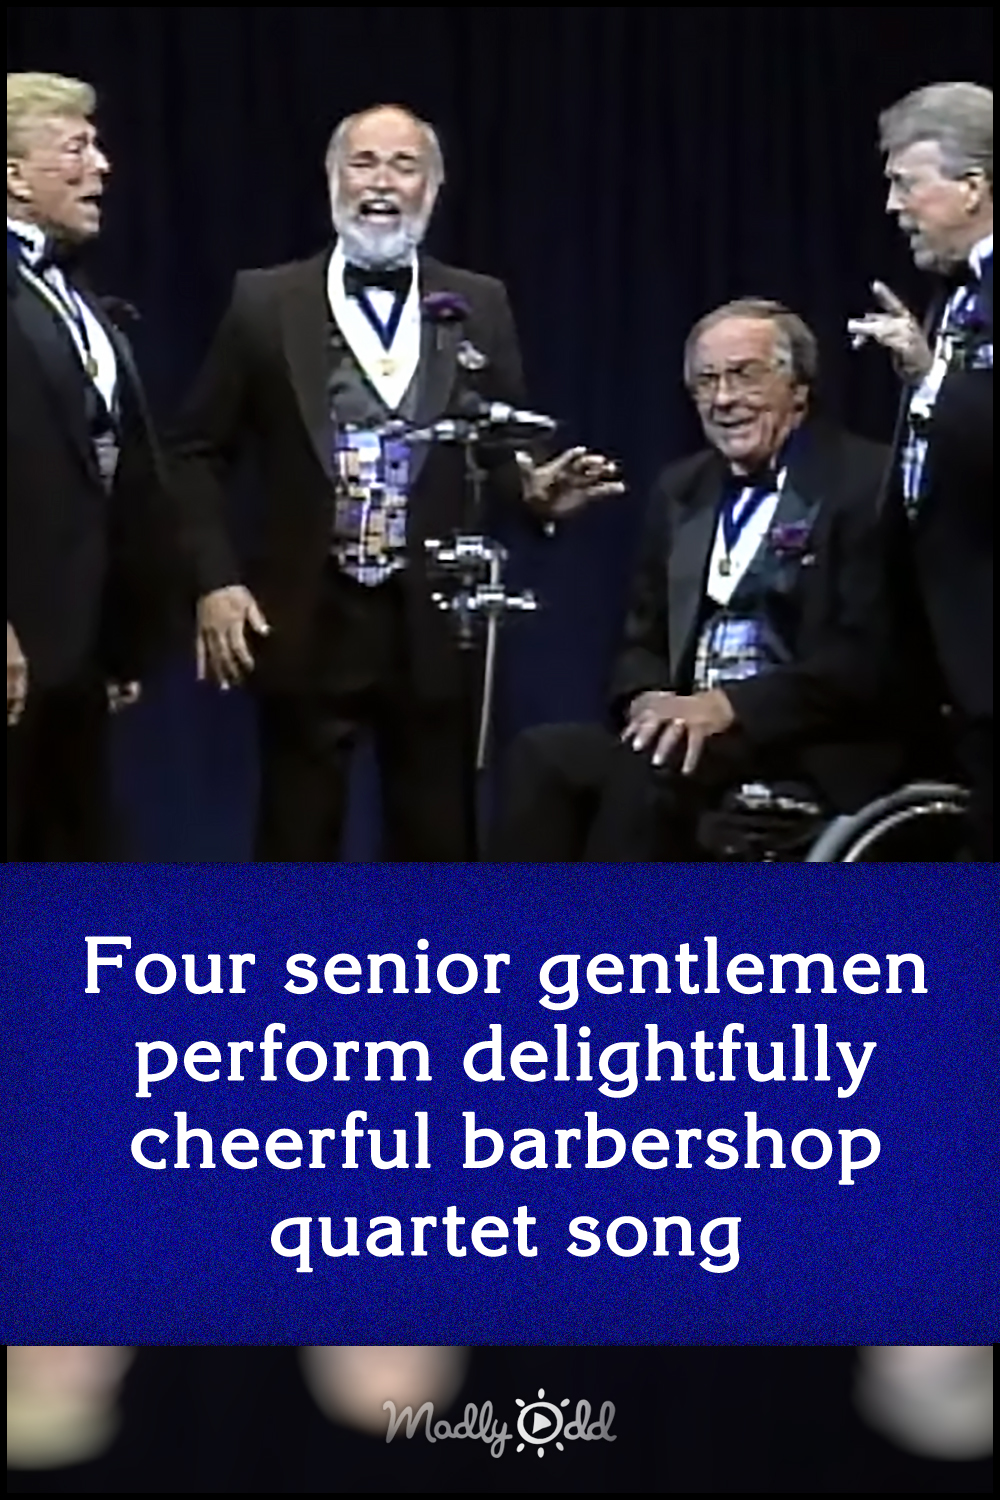 Four senior gentlemen perform delightfully cheerful barbershop quartet song